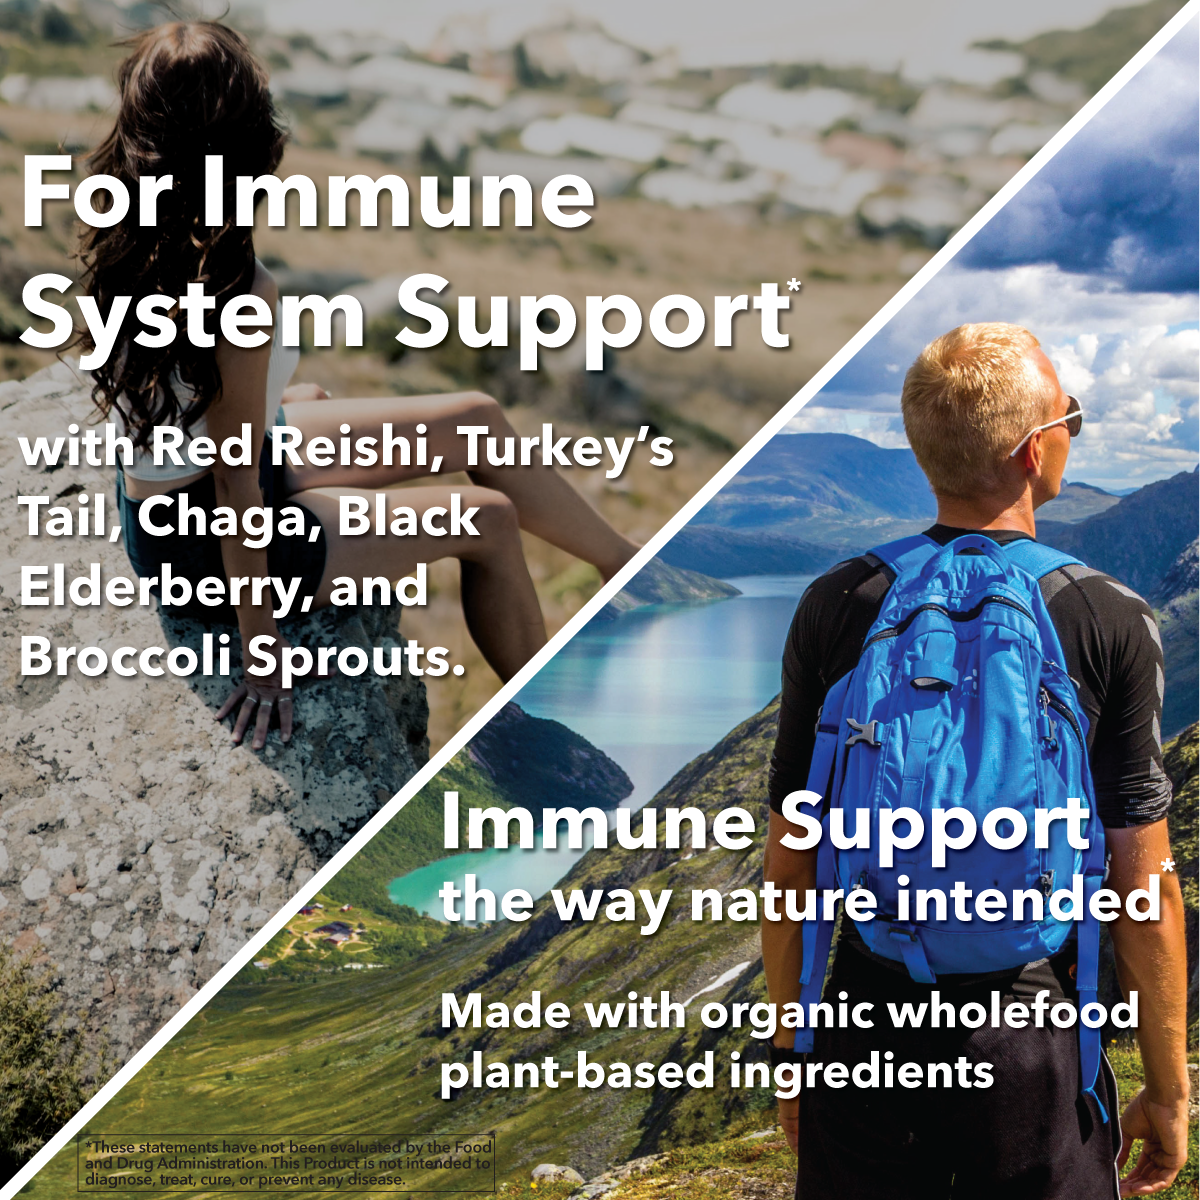 Wholefood Immunity Blend with Adaptogenic Mushrooms & Elderberry